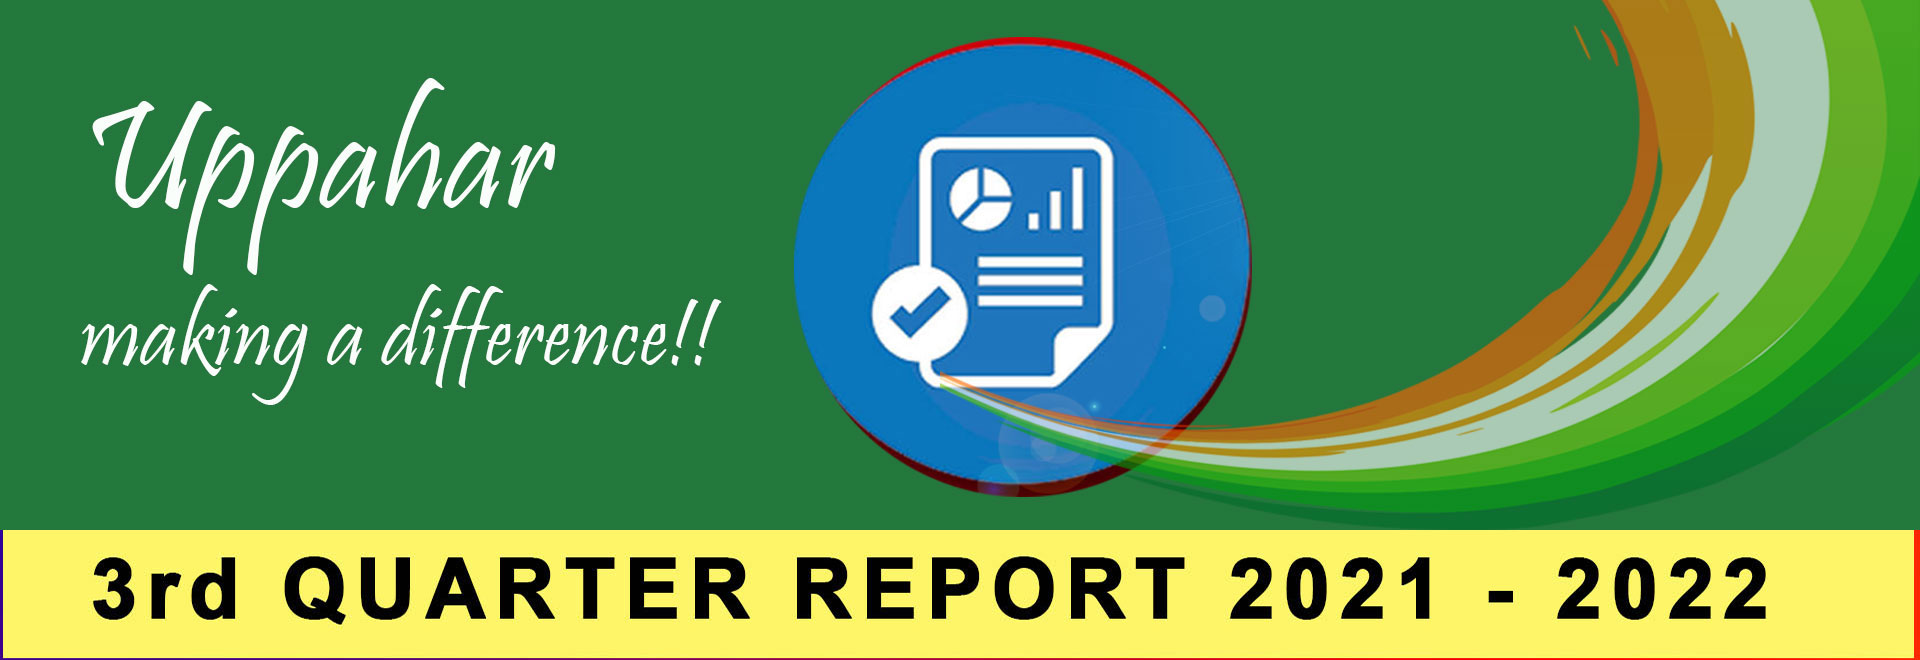 Uppahar India 2nd Quarterly Report 2021-2022